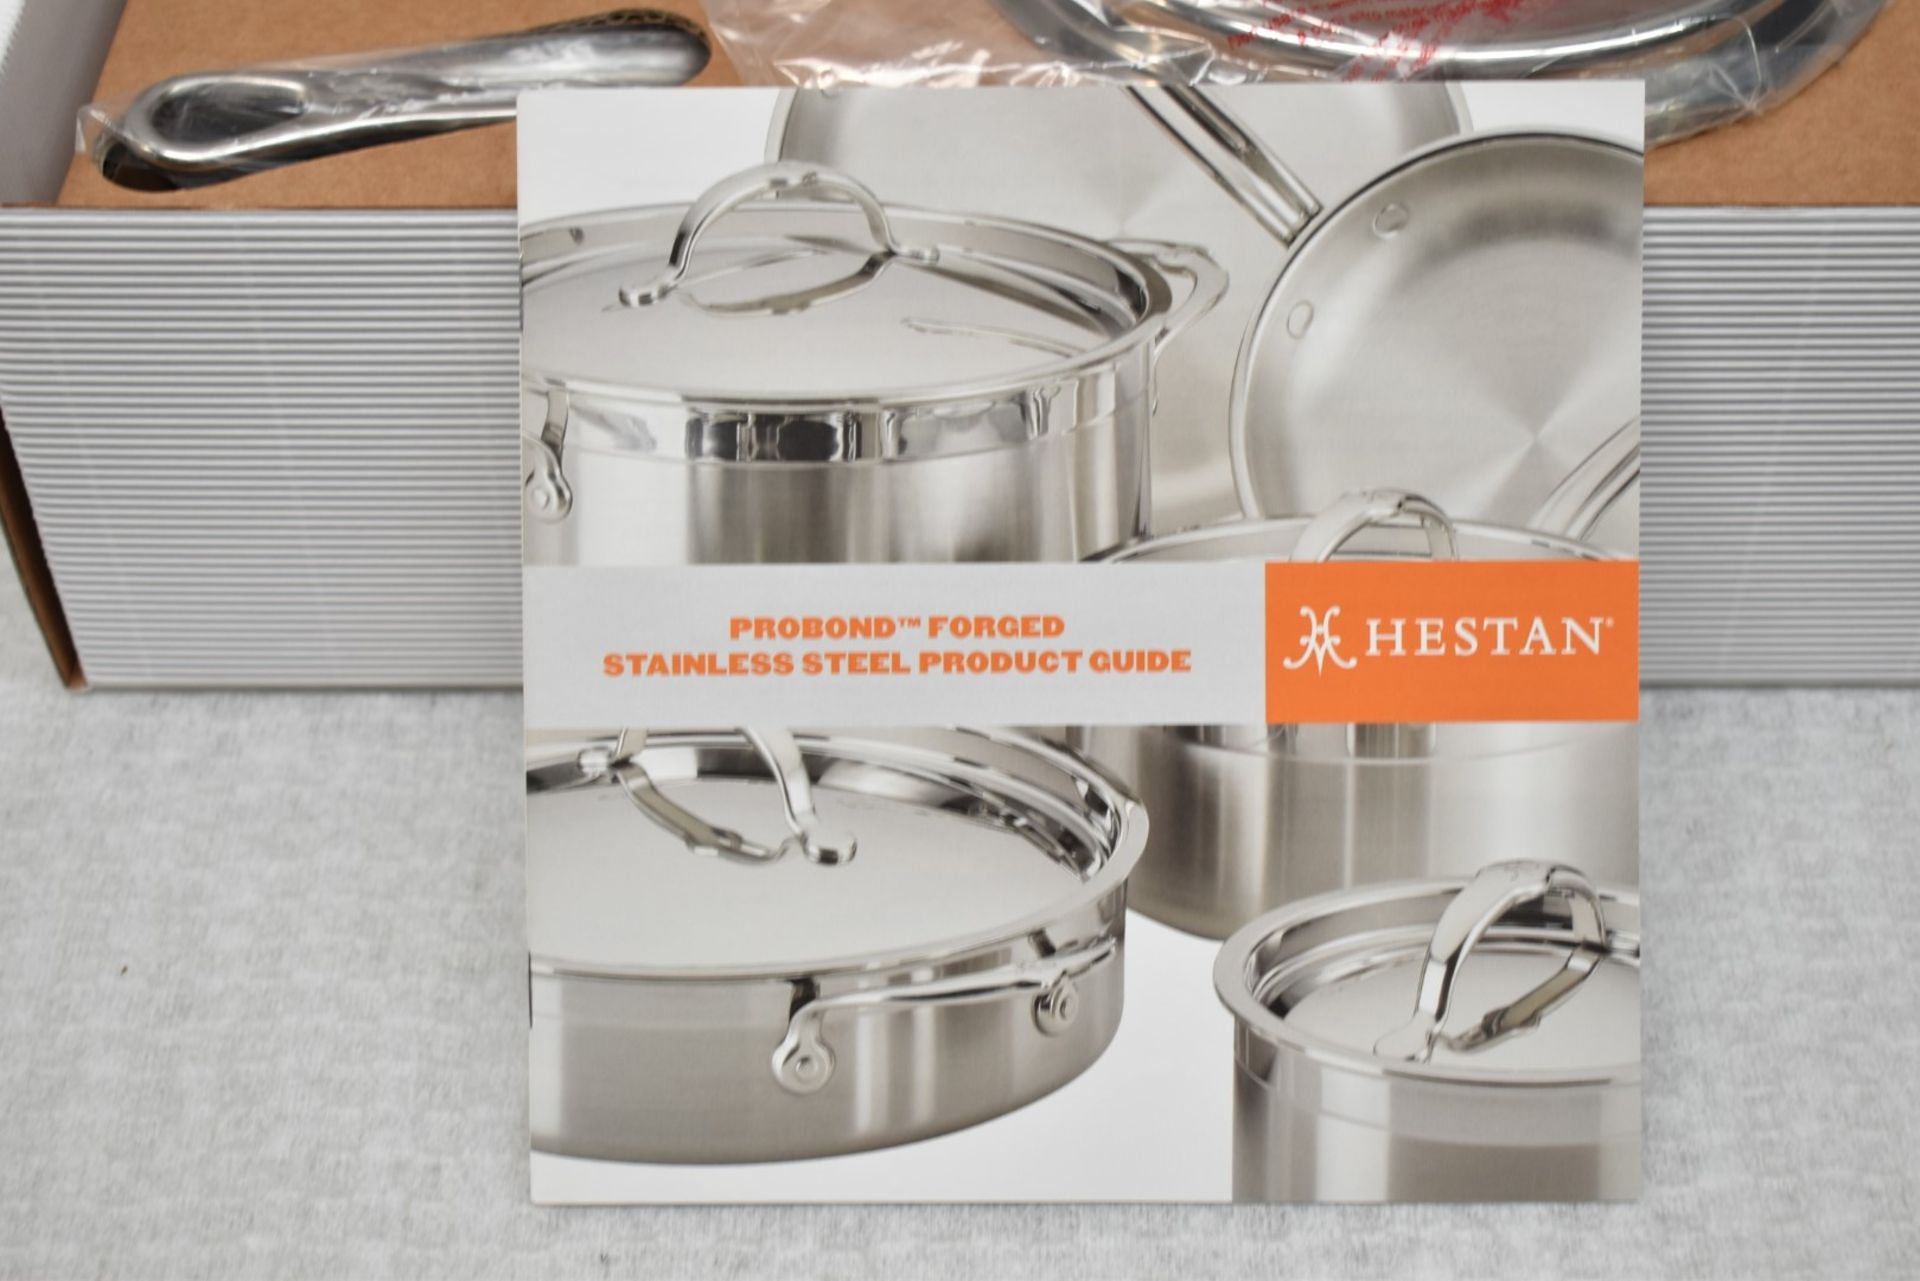 1 x HESTAN ProBond Professional Standard Stainless Steel Saucepan with Lid (16cm) - Original - Image 10 of 10